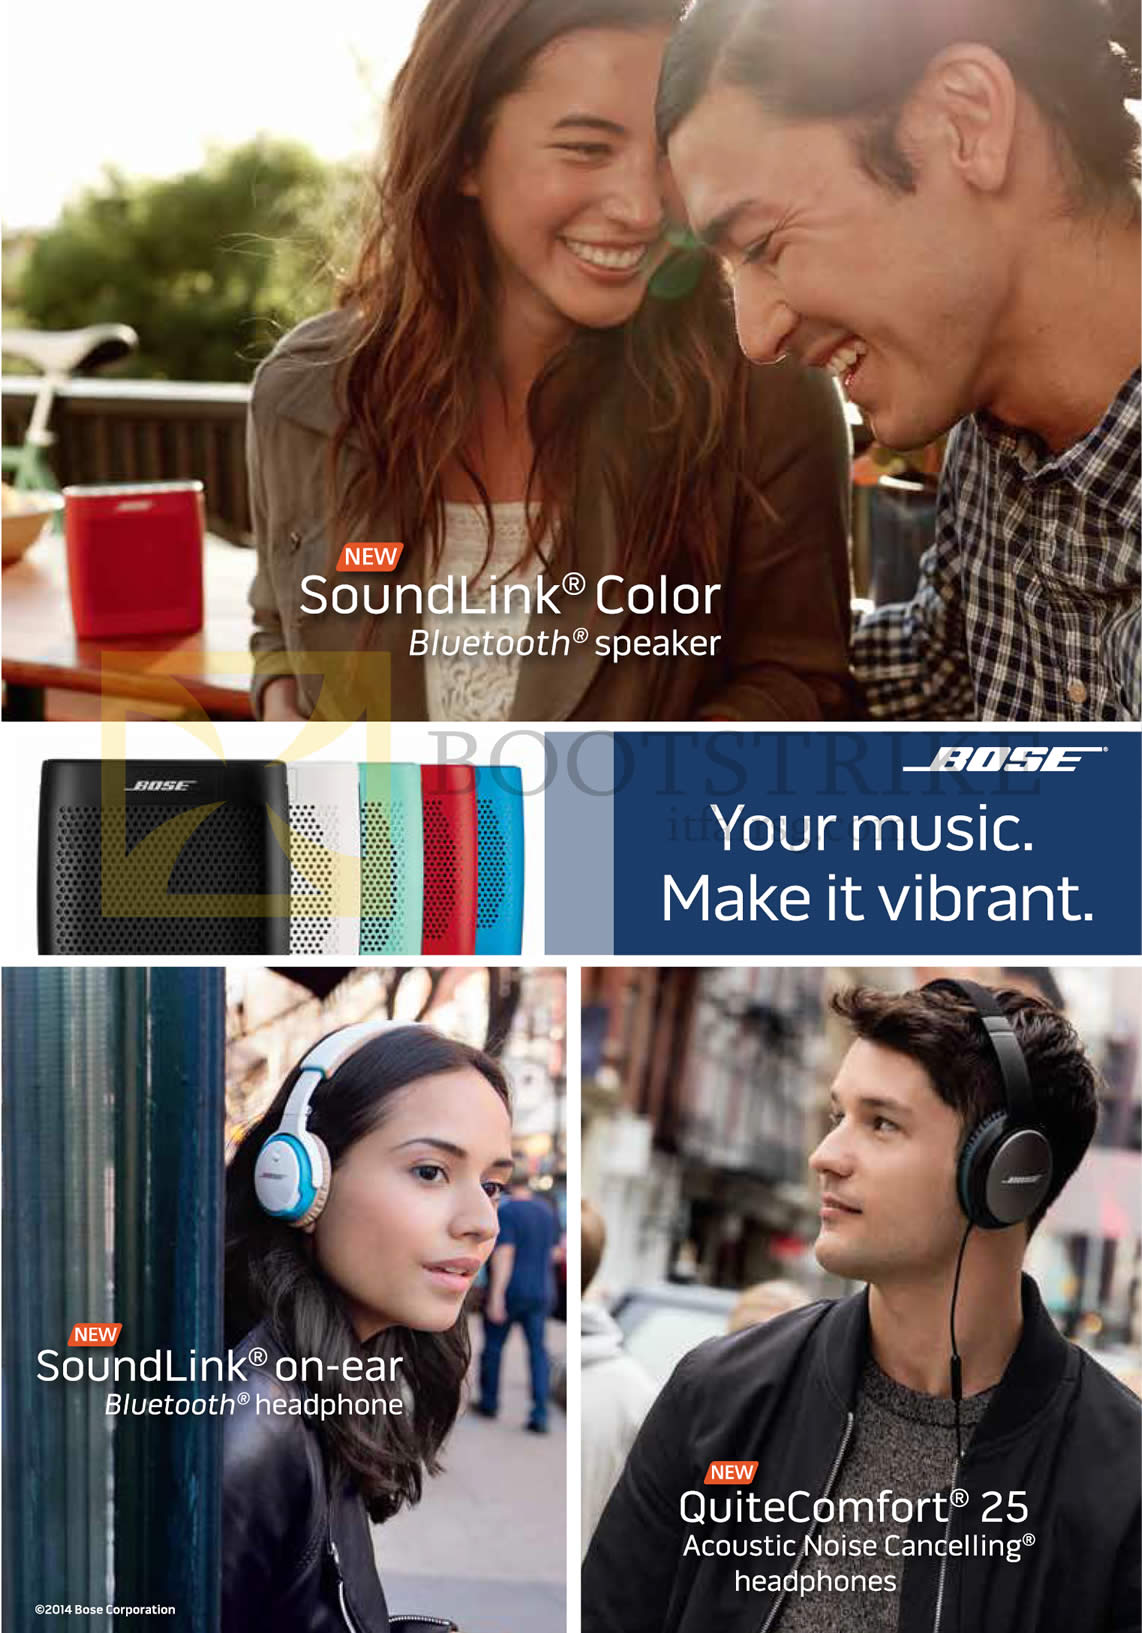 SITEX 2014 price list image brochure of Nubox Bose SoundLink Color Bluetooth Speaker, On-ear, QuiteComfort 25 Headphones